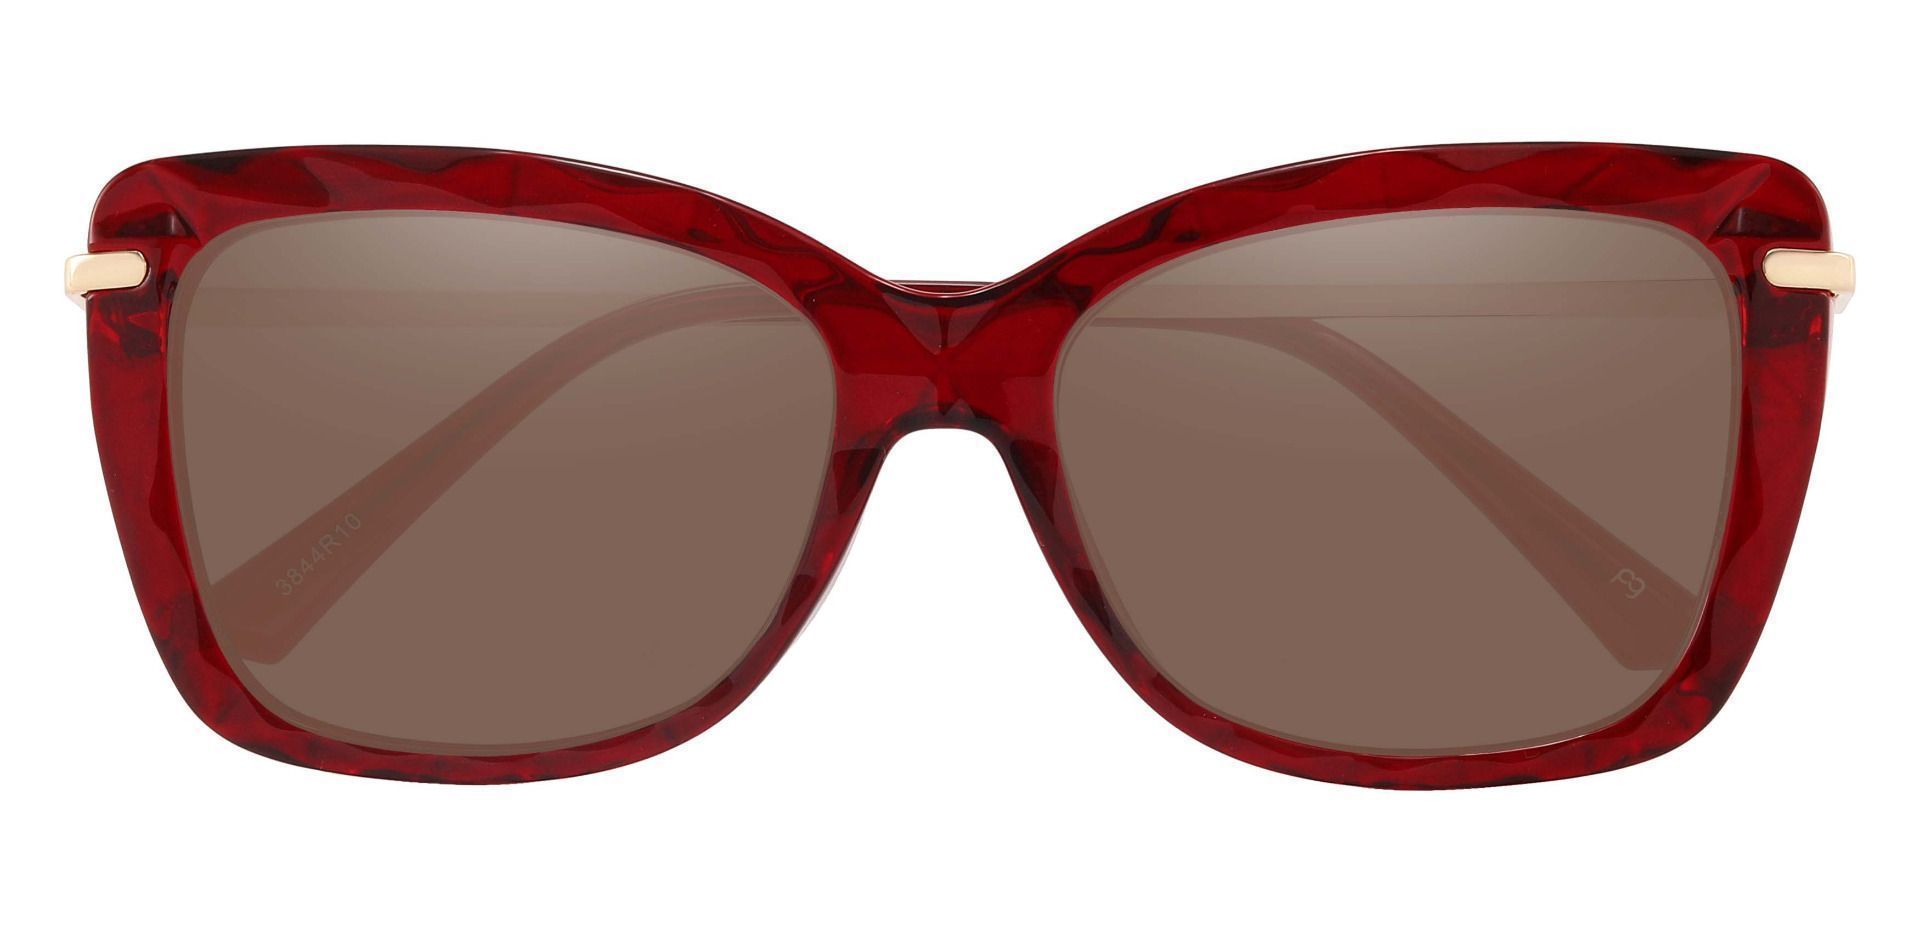 Shoshanna Rectangle Progressive Sunglasses - Red Frame With Brown Lenses